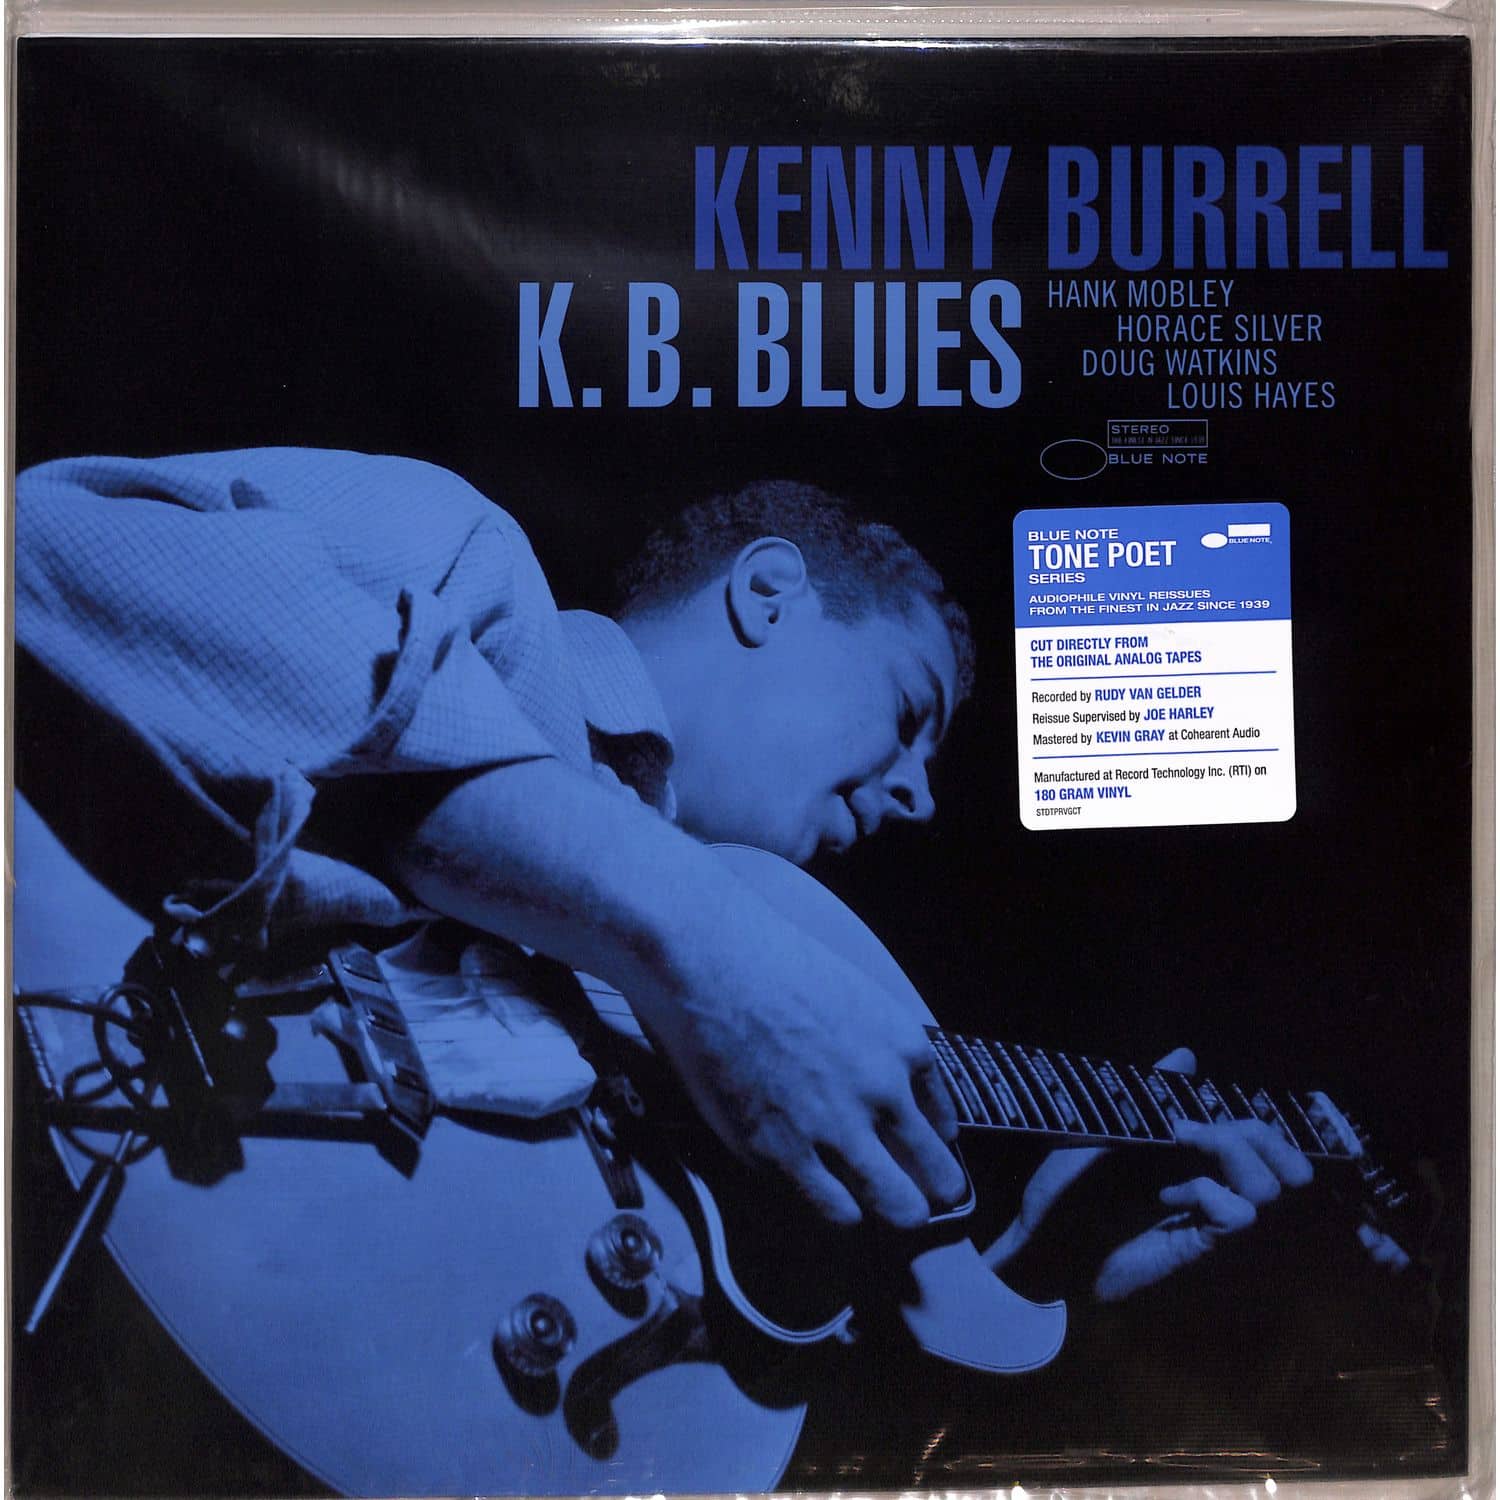 Kenny Burrell - K.B. BURRELL 